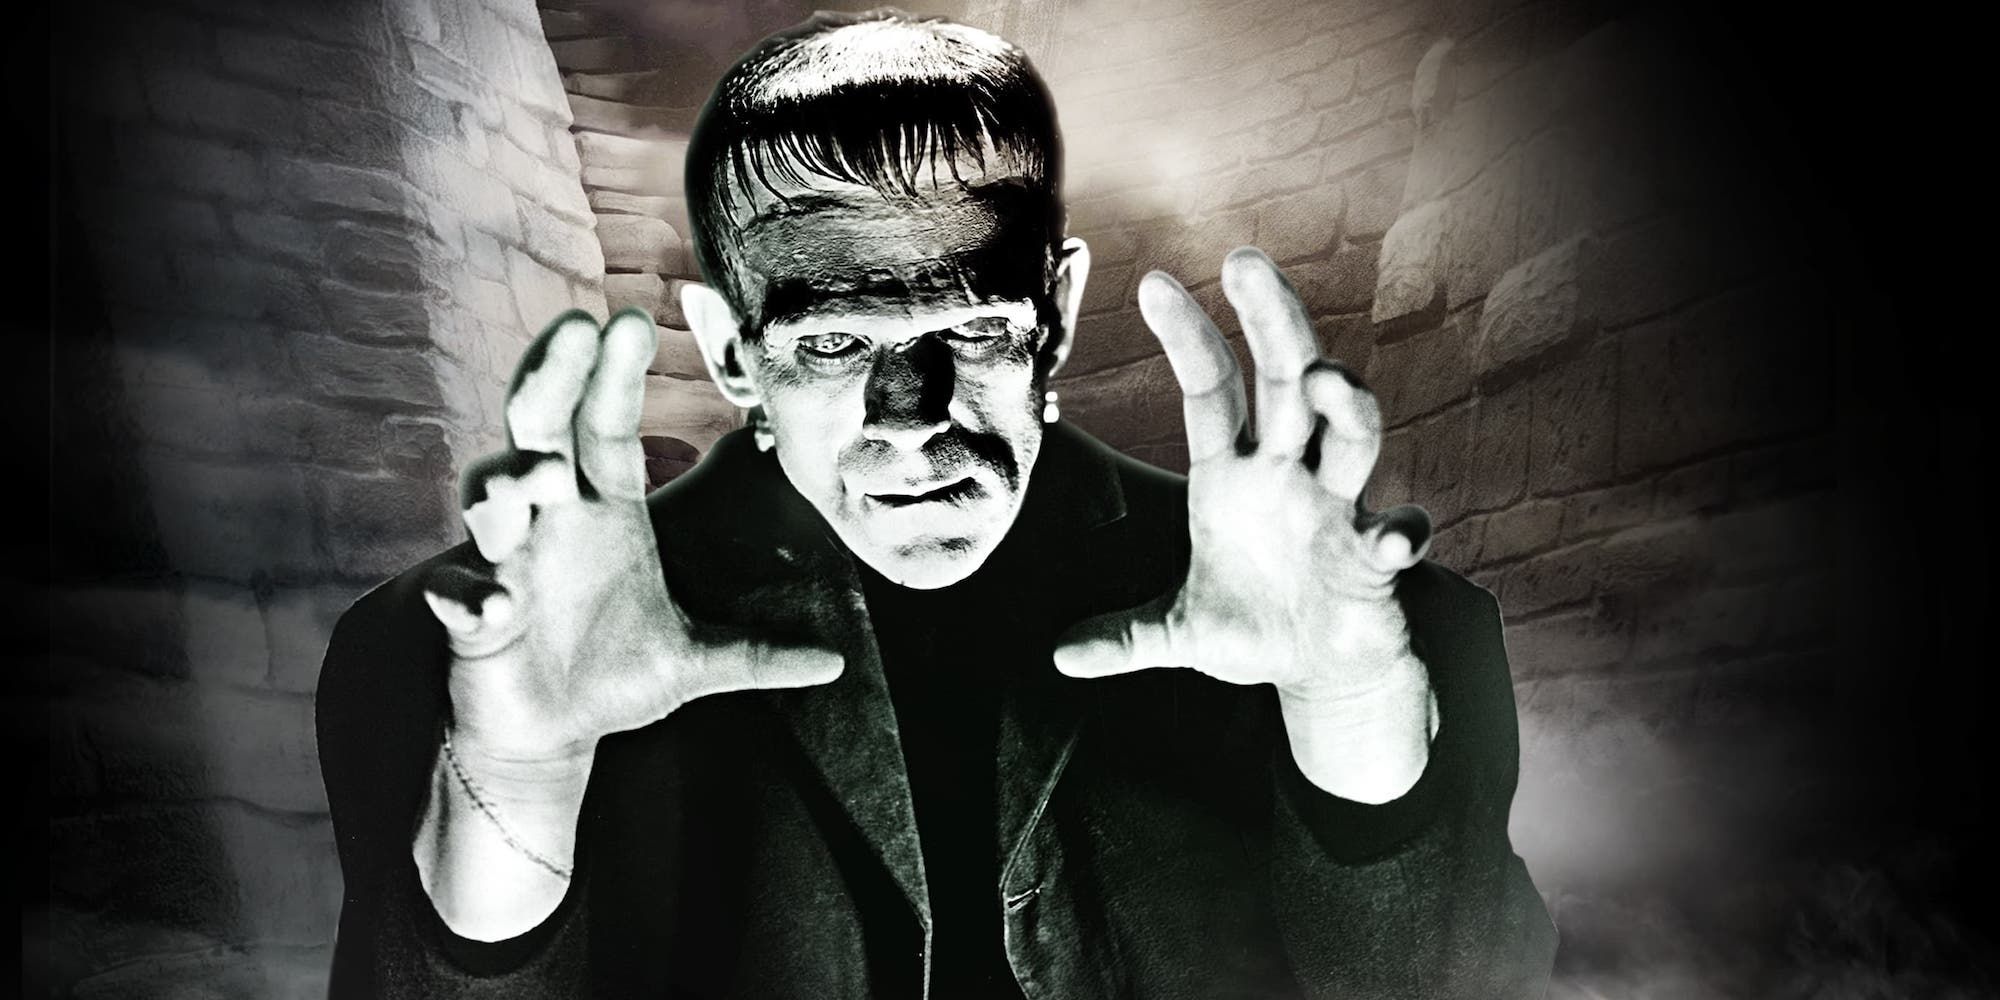 Boris Karloff as Frankenstein Reaching Toward the Camera